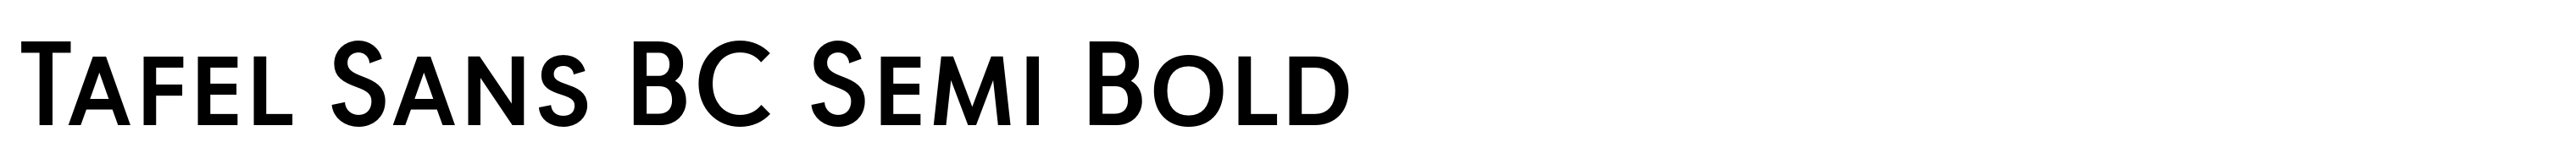 Tafel Sans BC Semi Bold